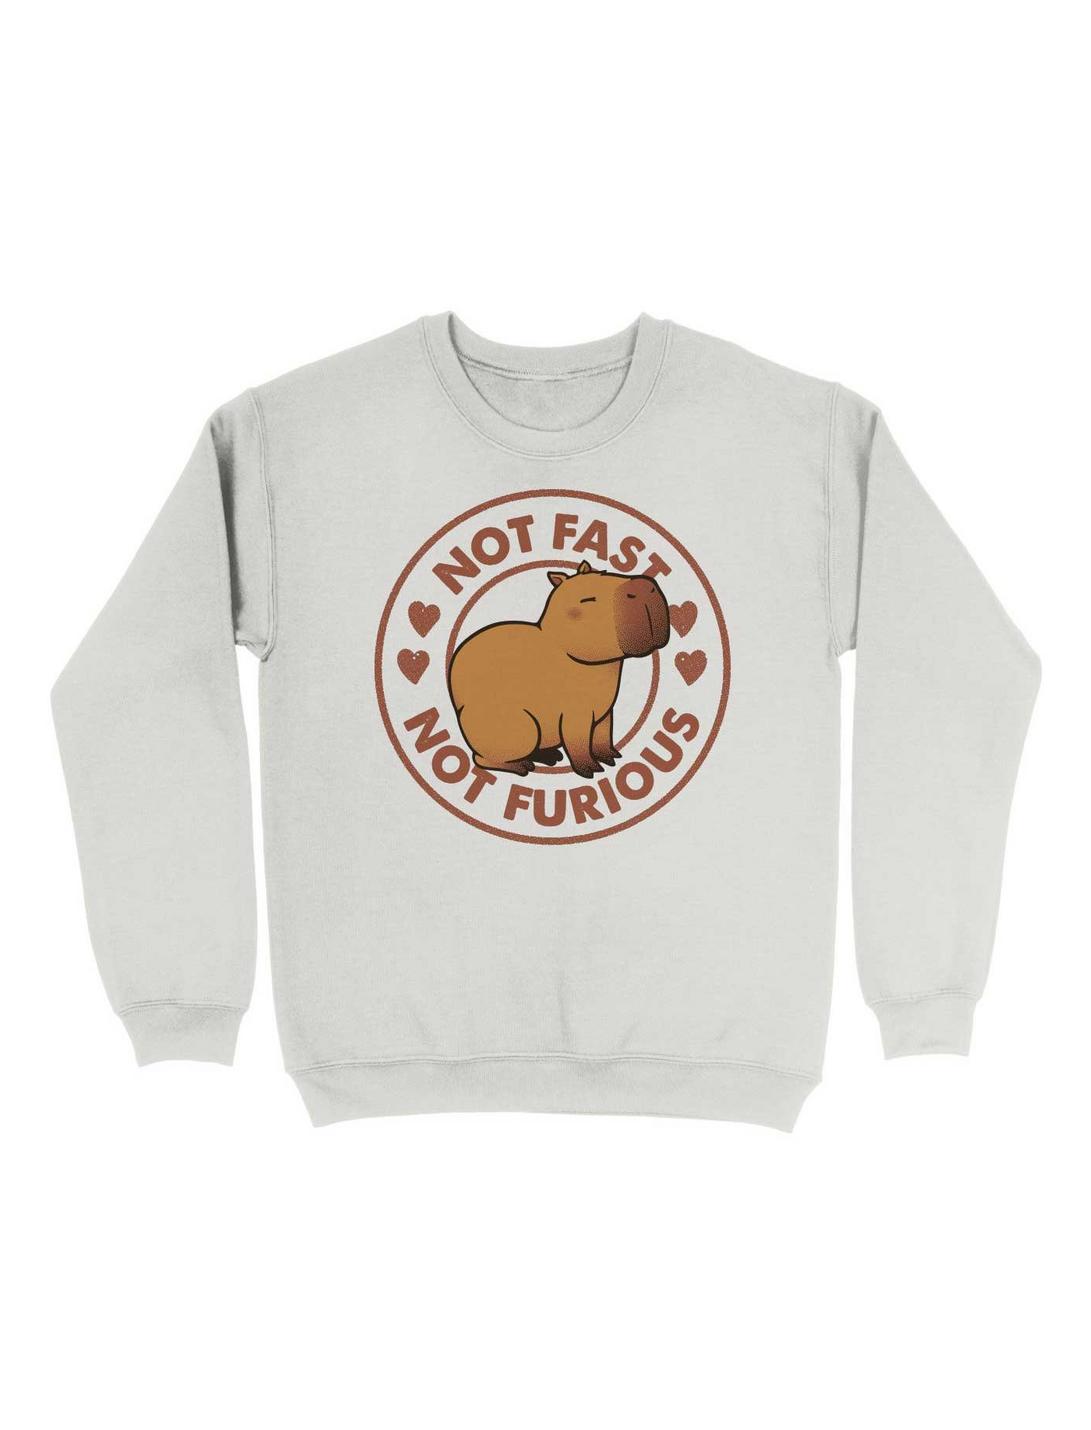 Not Fast Not Furious Capybara Sweatshirt, WHITE, hi-res